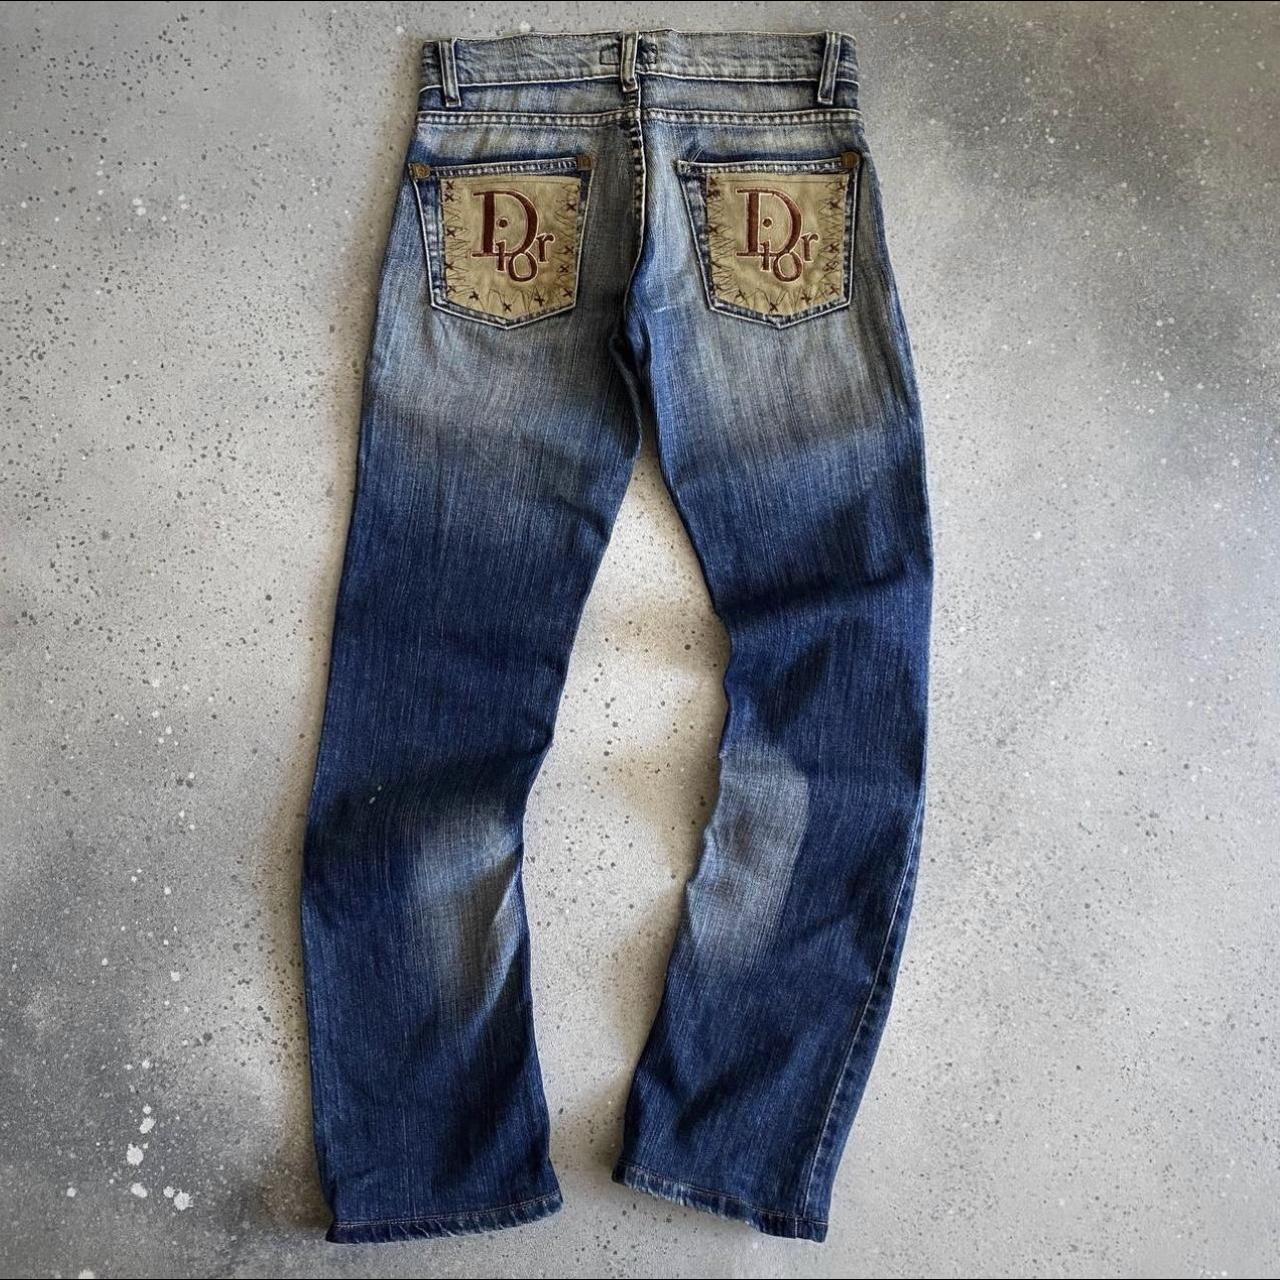 Dior Women's Jeans | Depop